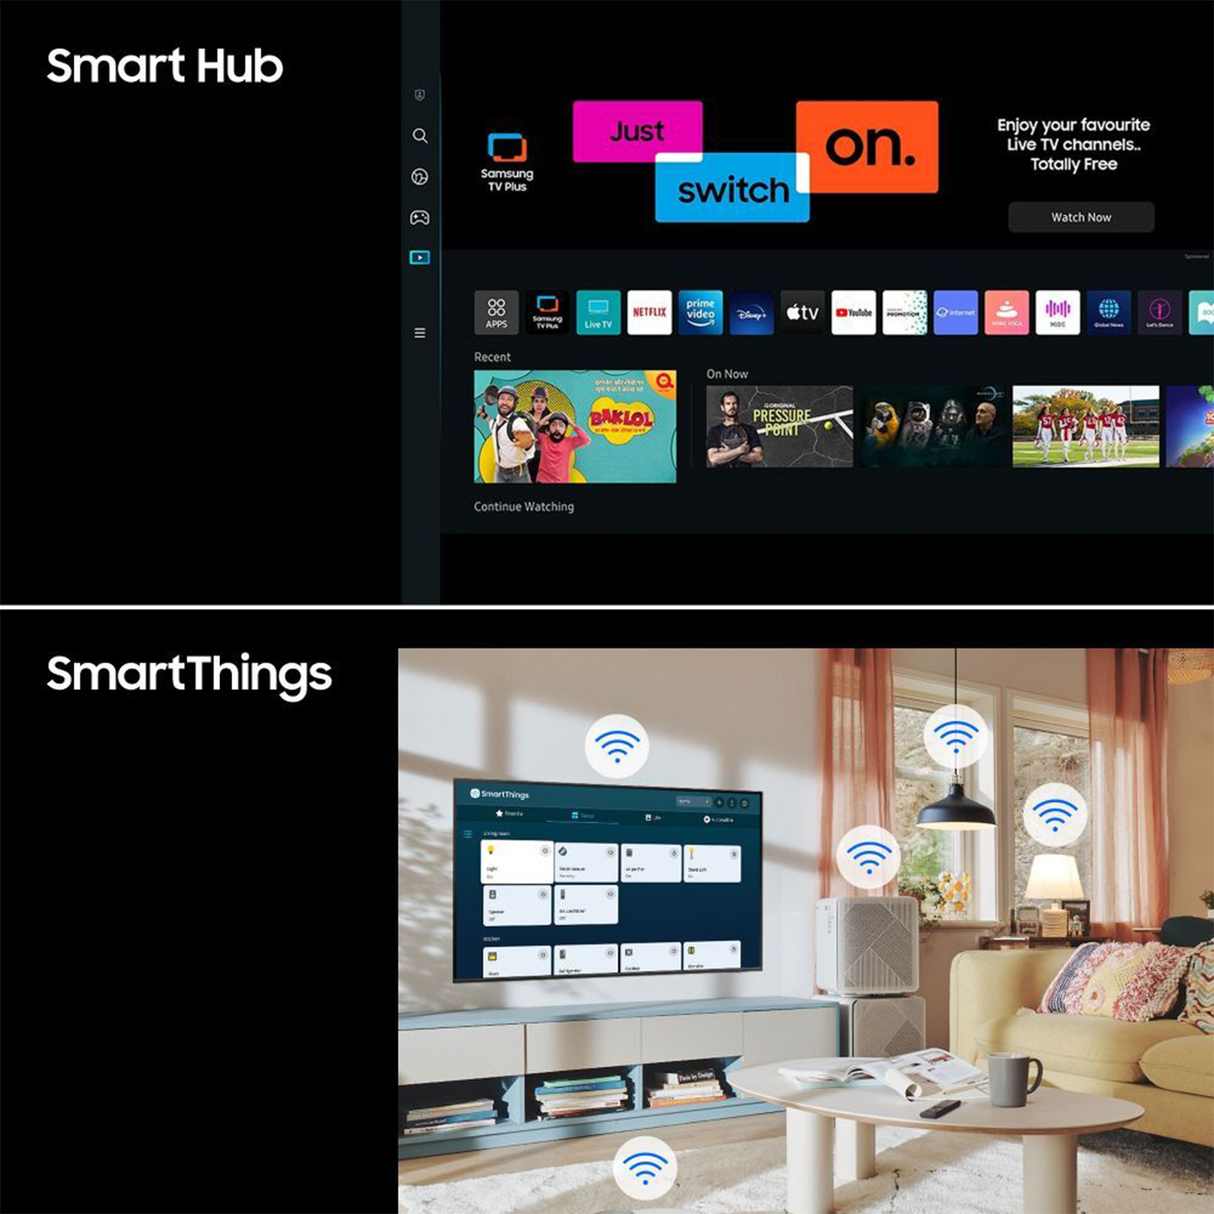 Samsung 65" Smart LED TV: Modern design meets intelligent features for enhanced entertainment.